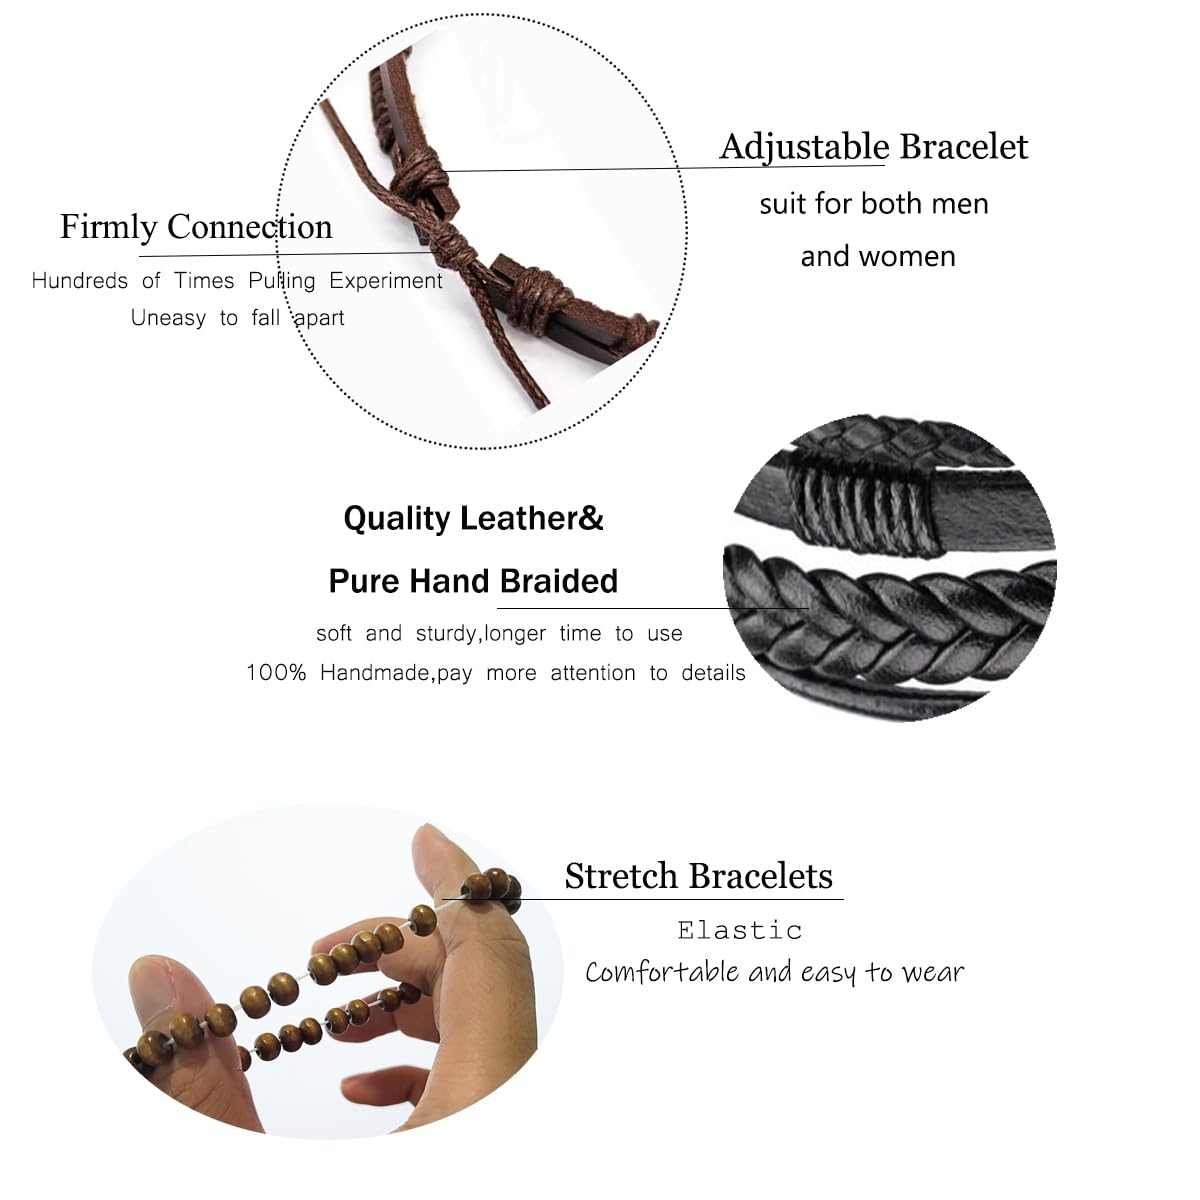 24 PCS Braided Leather Bracelet for Men Women Cool Woven Wrist Cuff Bracelets Hemp Cords Wooden Beads Ethnic Tribal Handmade Wrap Adjustable Wristband Bracelets